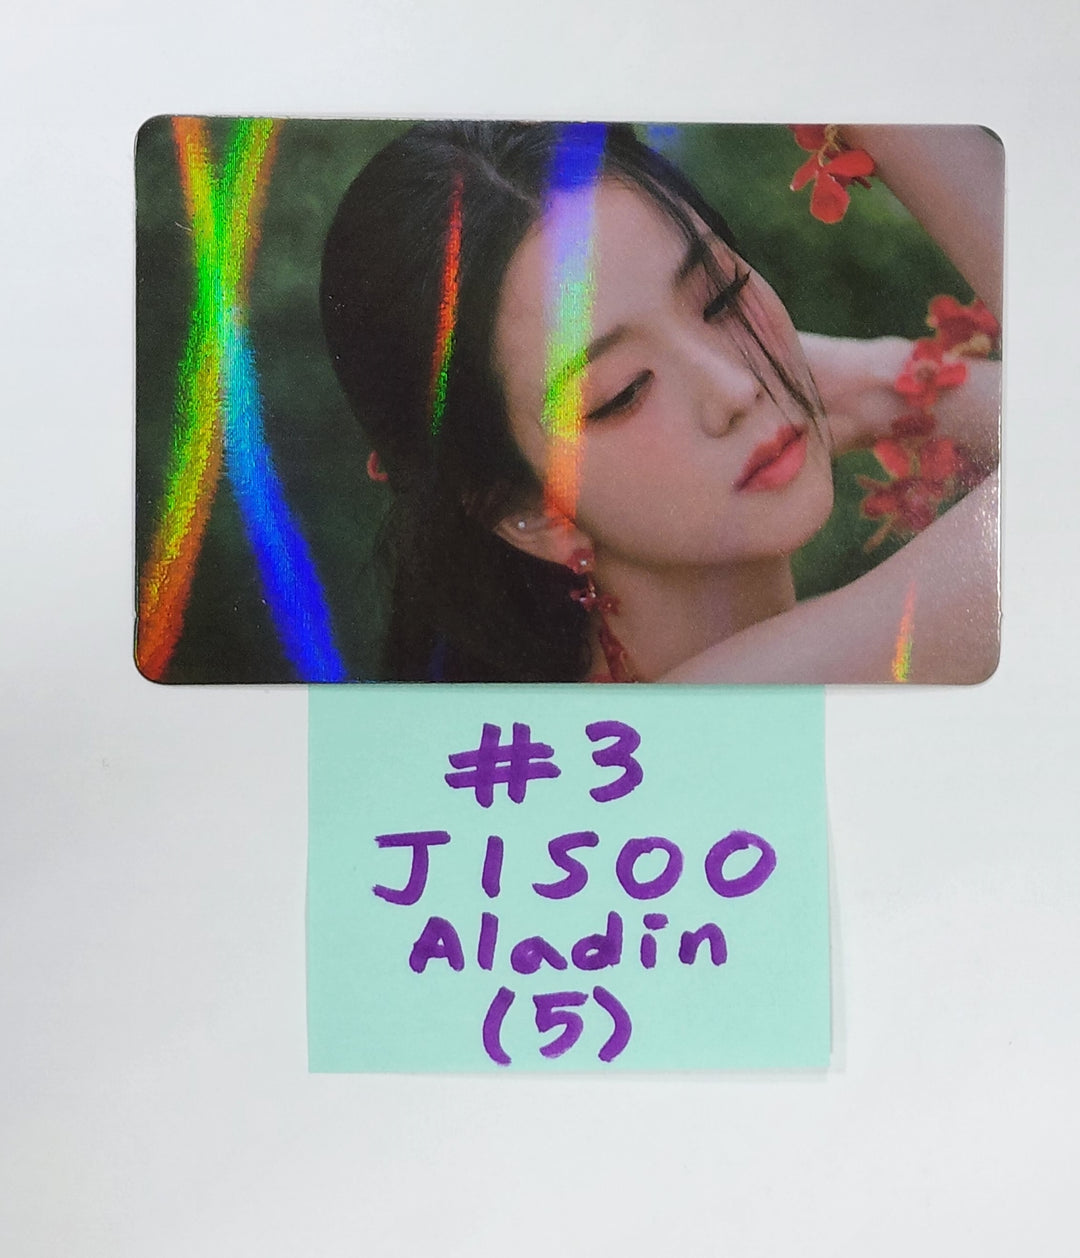 JISOO (Of Black Pink) "ME" 1st Single Album - Aladin Pre-Order Benefit Hologram Photocard